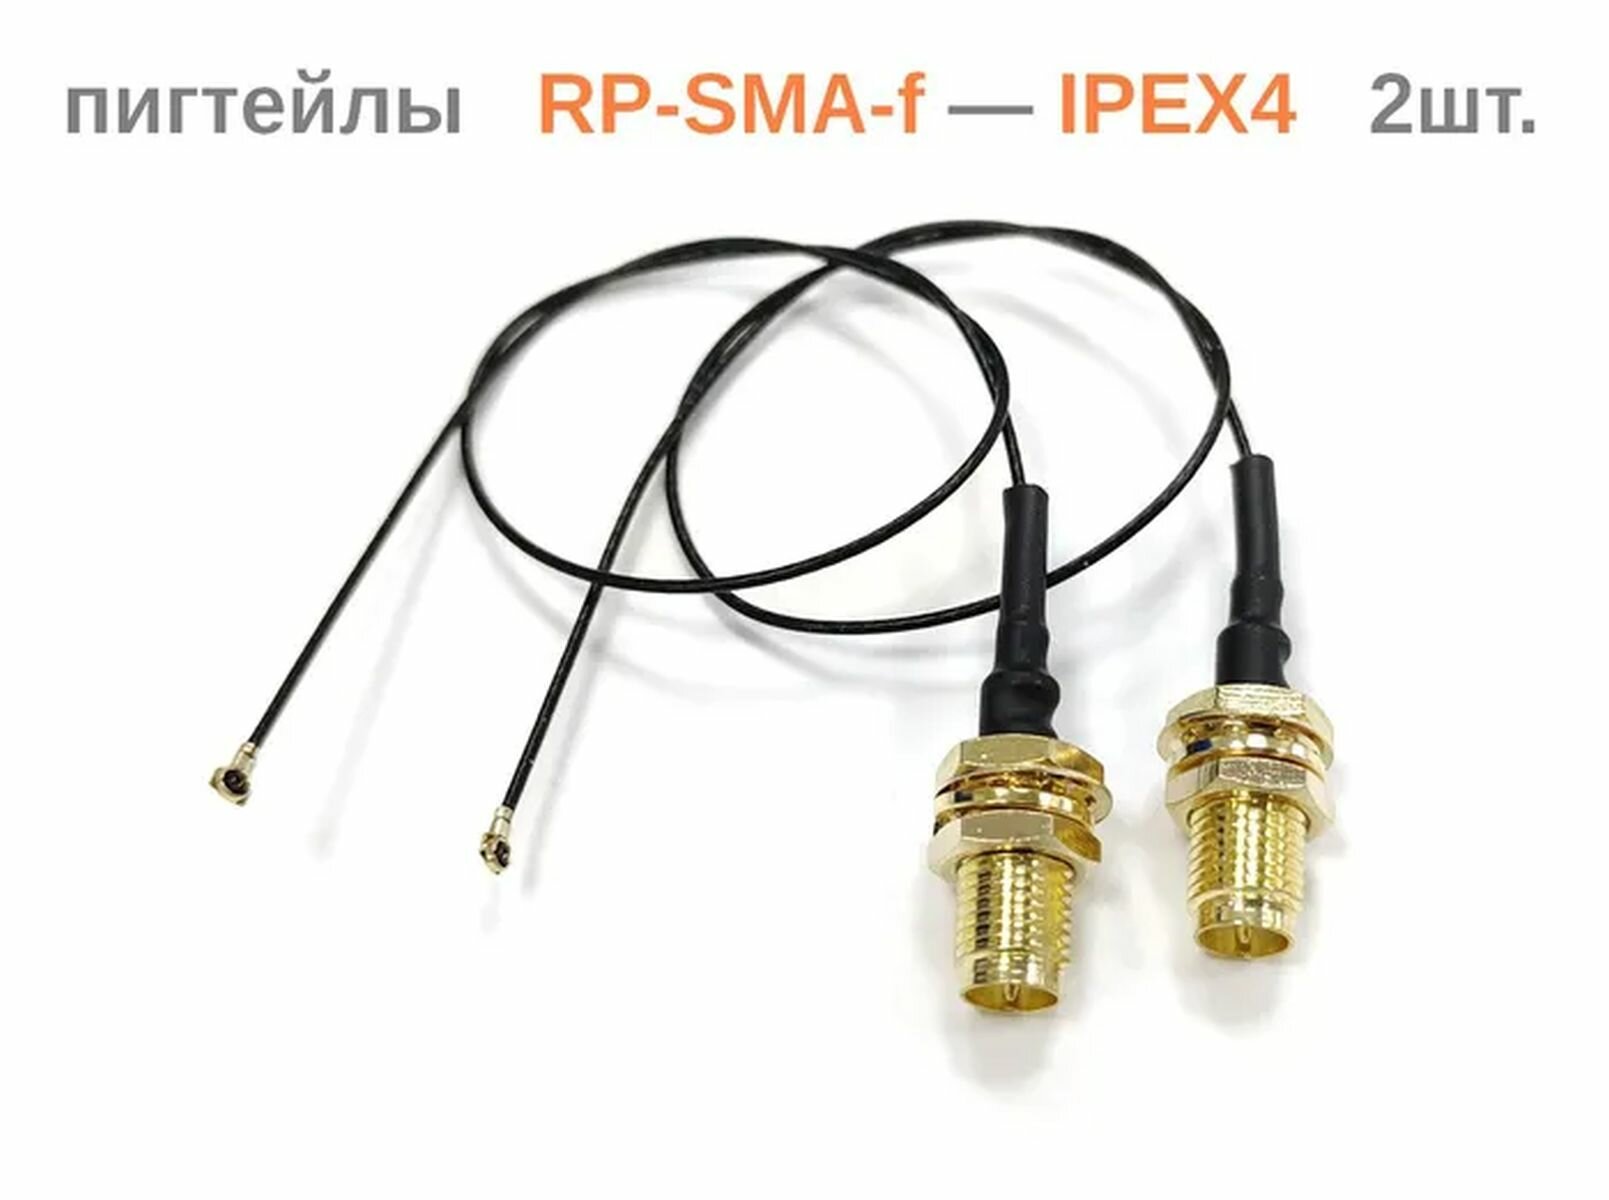 Комплект 2шт. адаптеров (пигтейлов), RP-SMA-f — MHF4 (I-PEX4, W.FL), для Wi-Fi плат miniPCI-e